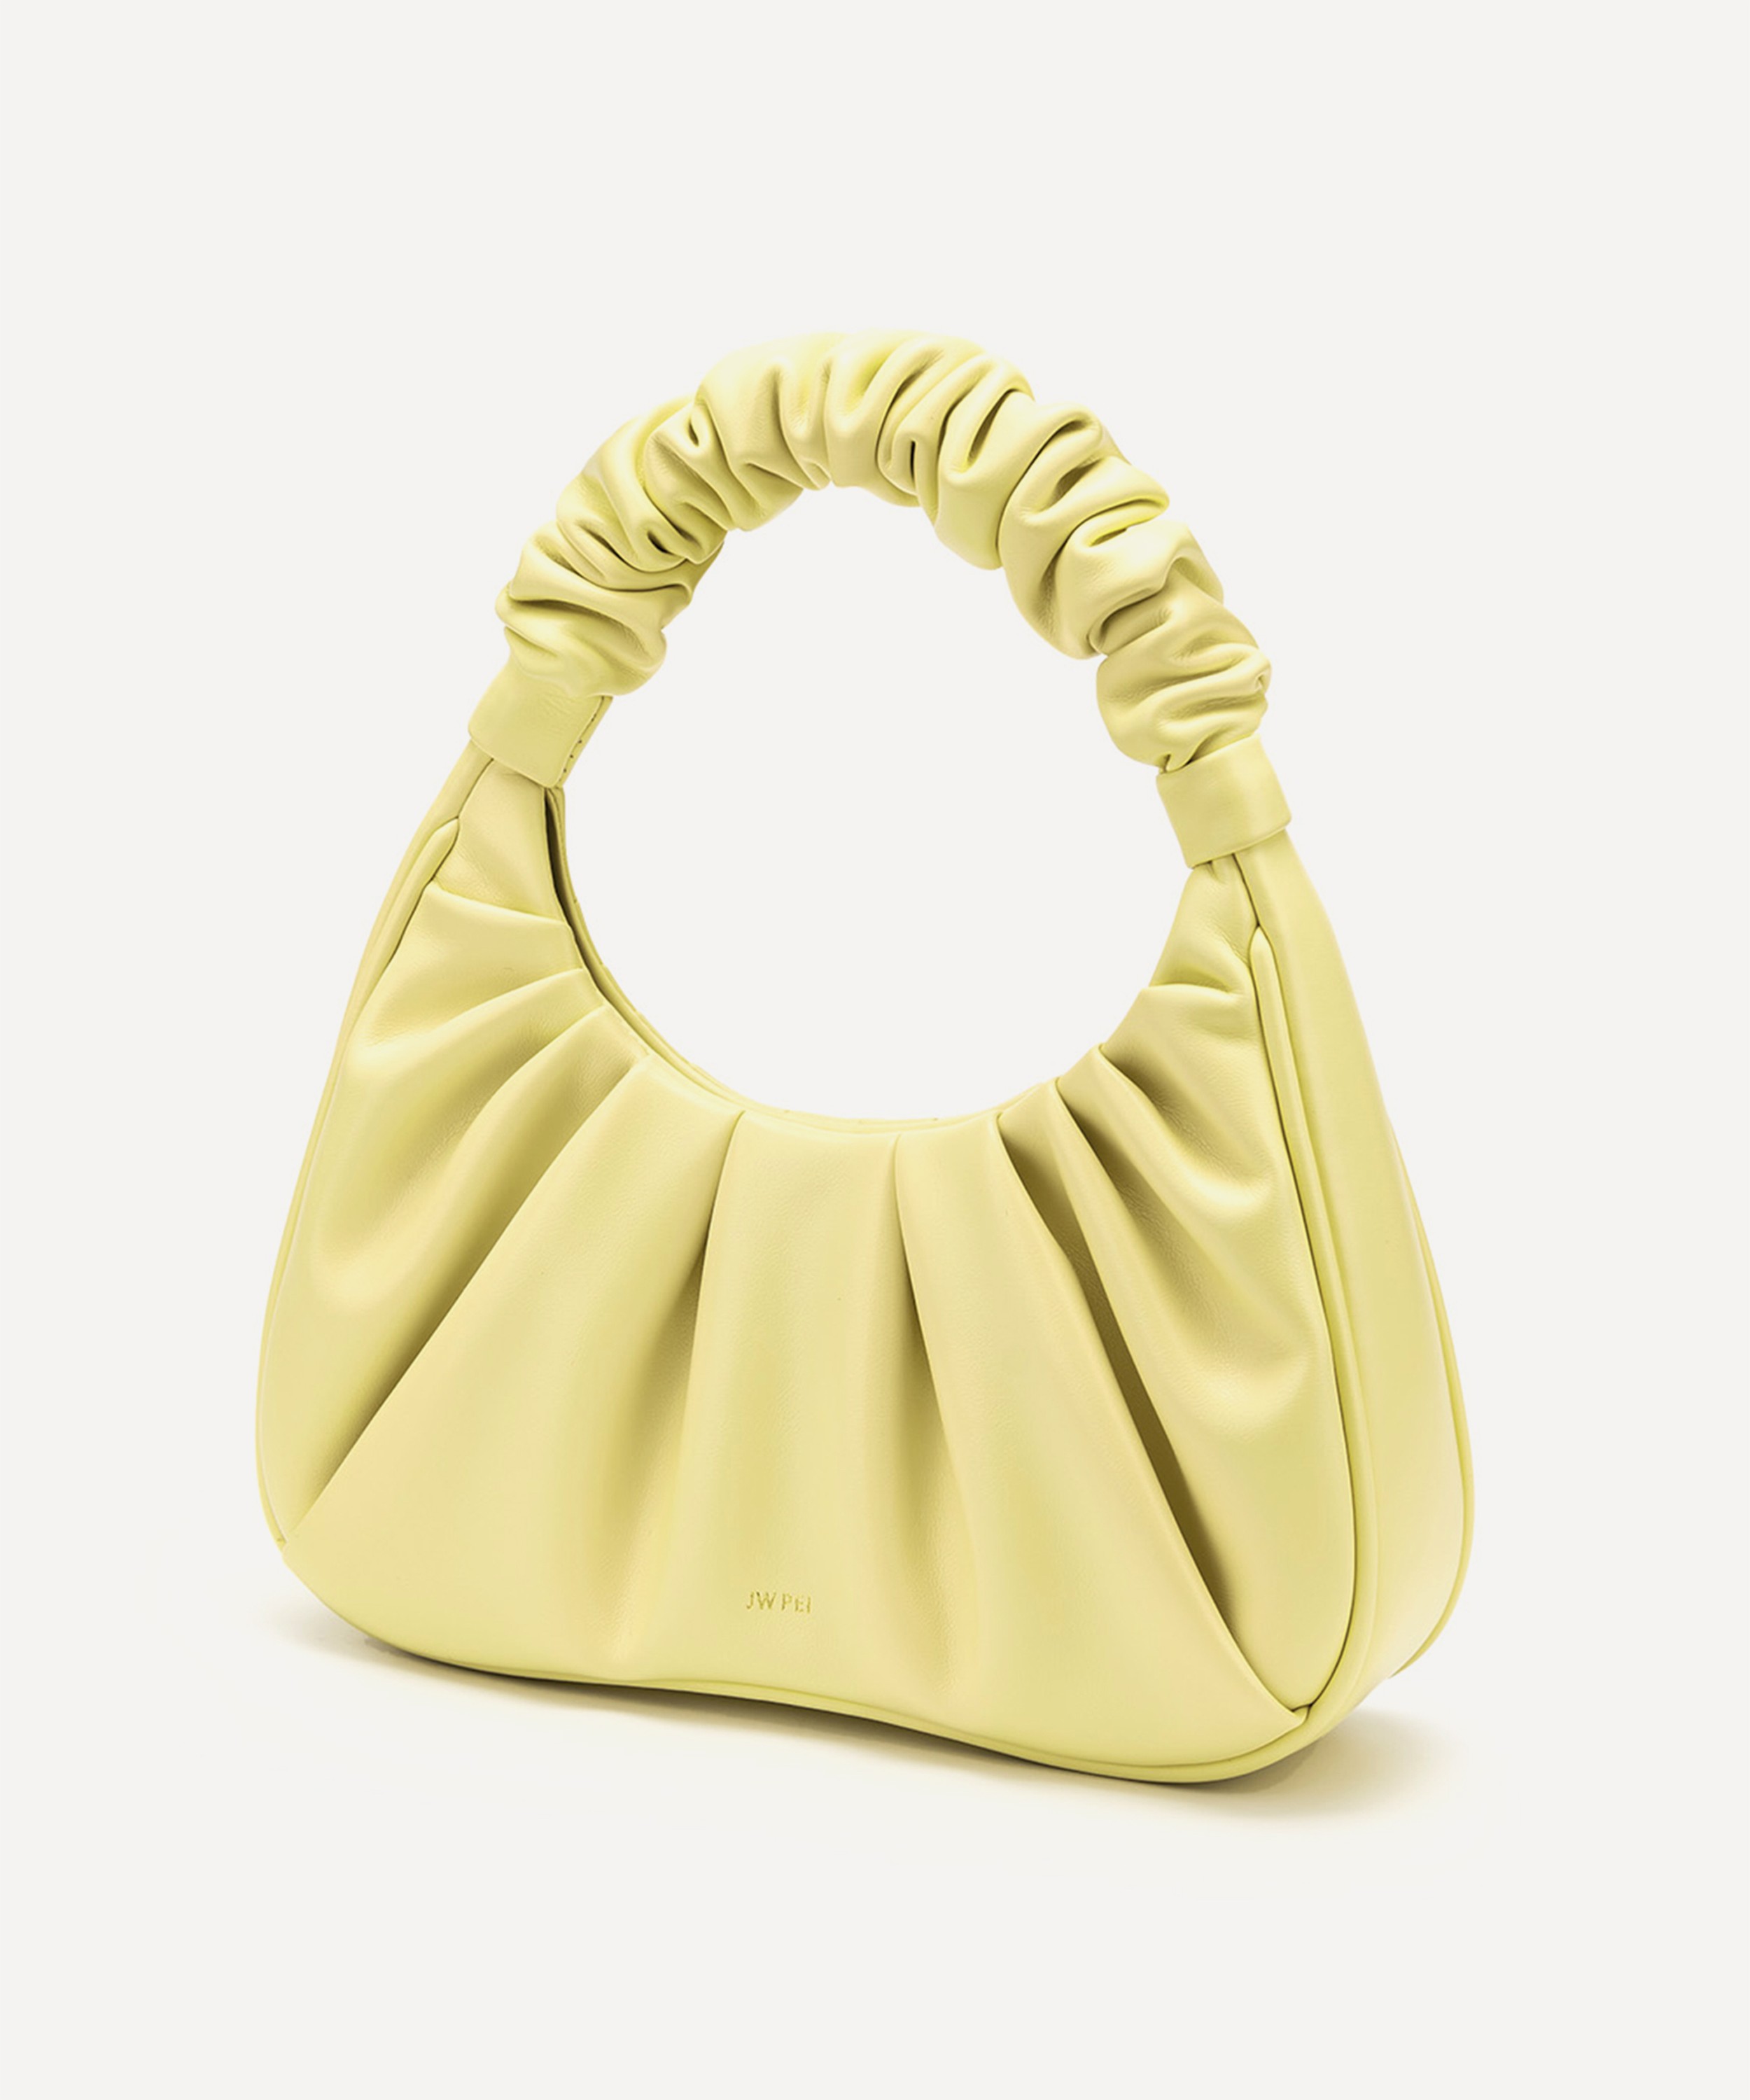 JW PEI Mini Flap Bag Review  Flap bag, Jw pei, Crossbody bag outfit